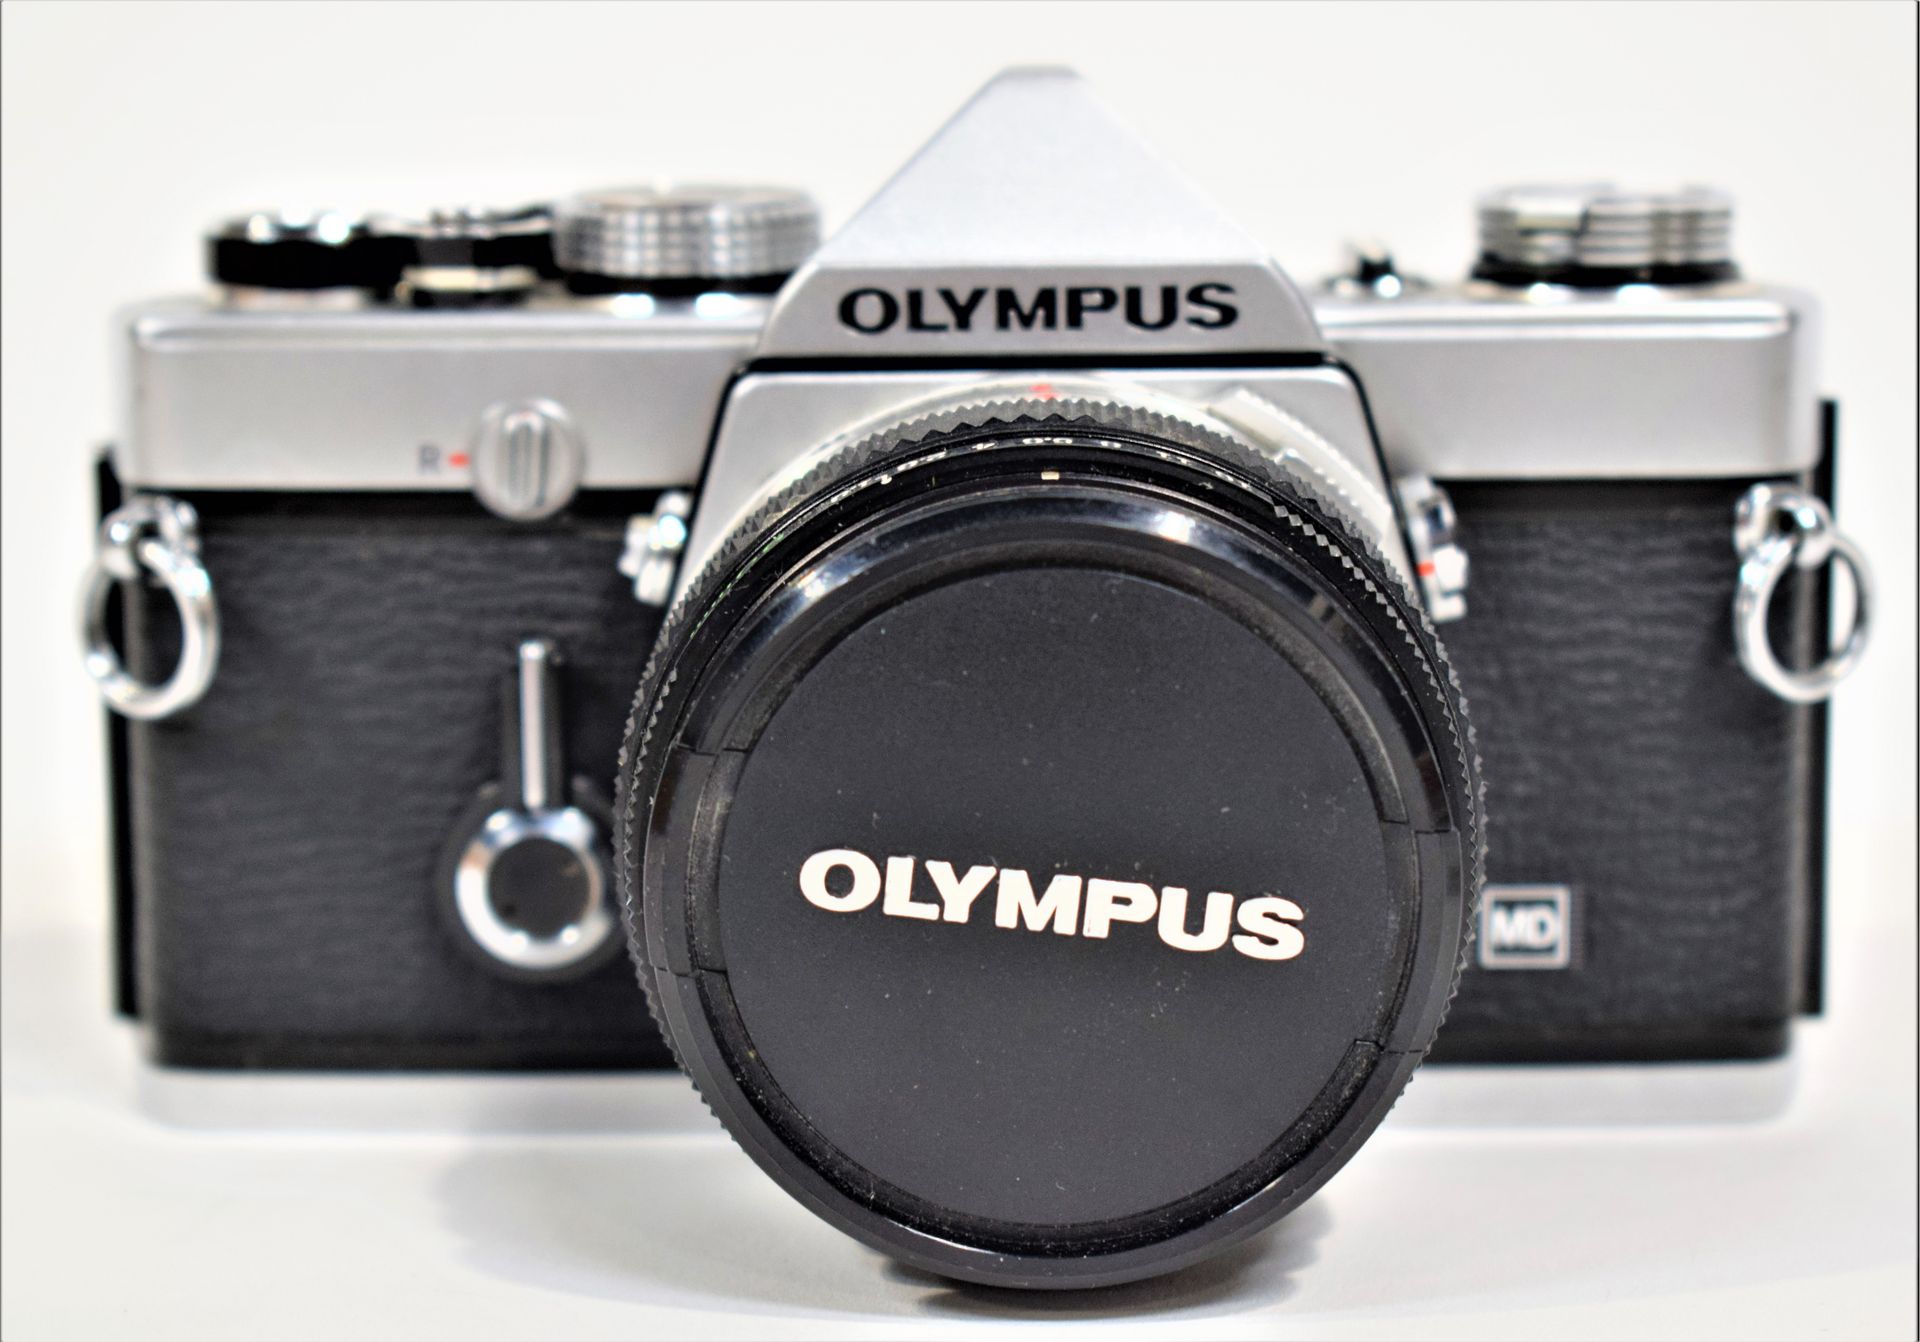 Null OLYMPUS OM-1, 1976

Zuiko lens, aperture 1 : 1.8 F 50

Very good condition &hellip;